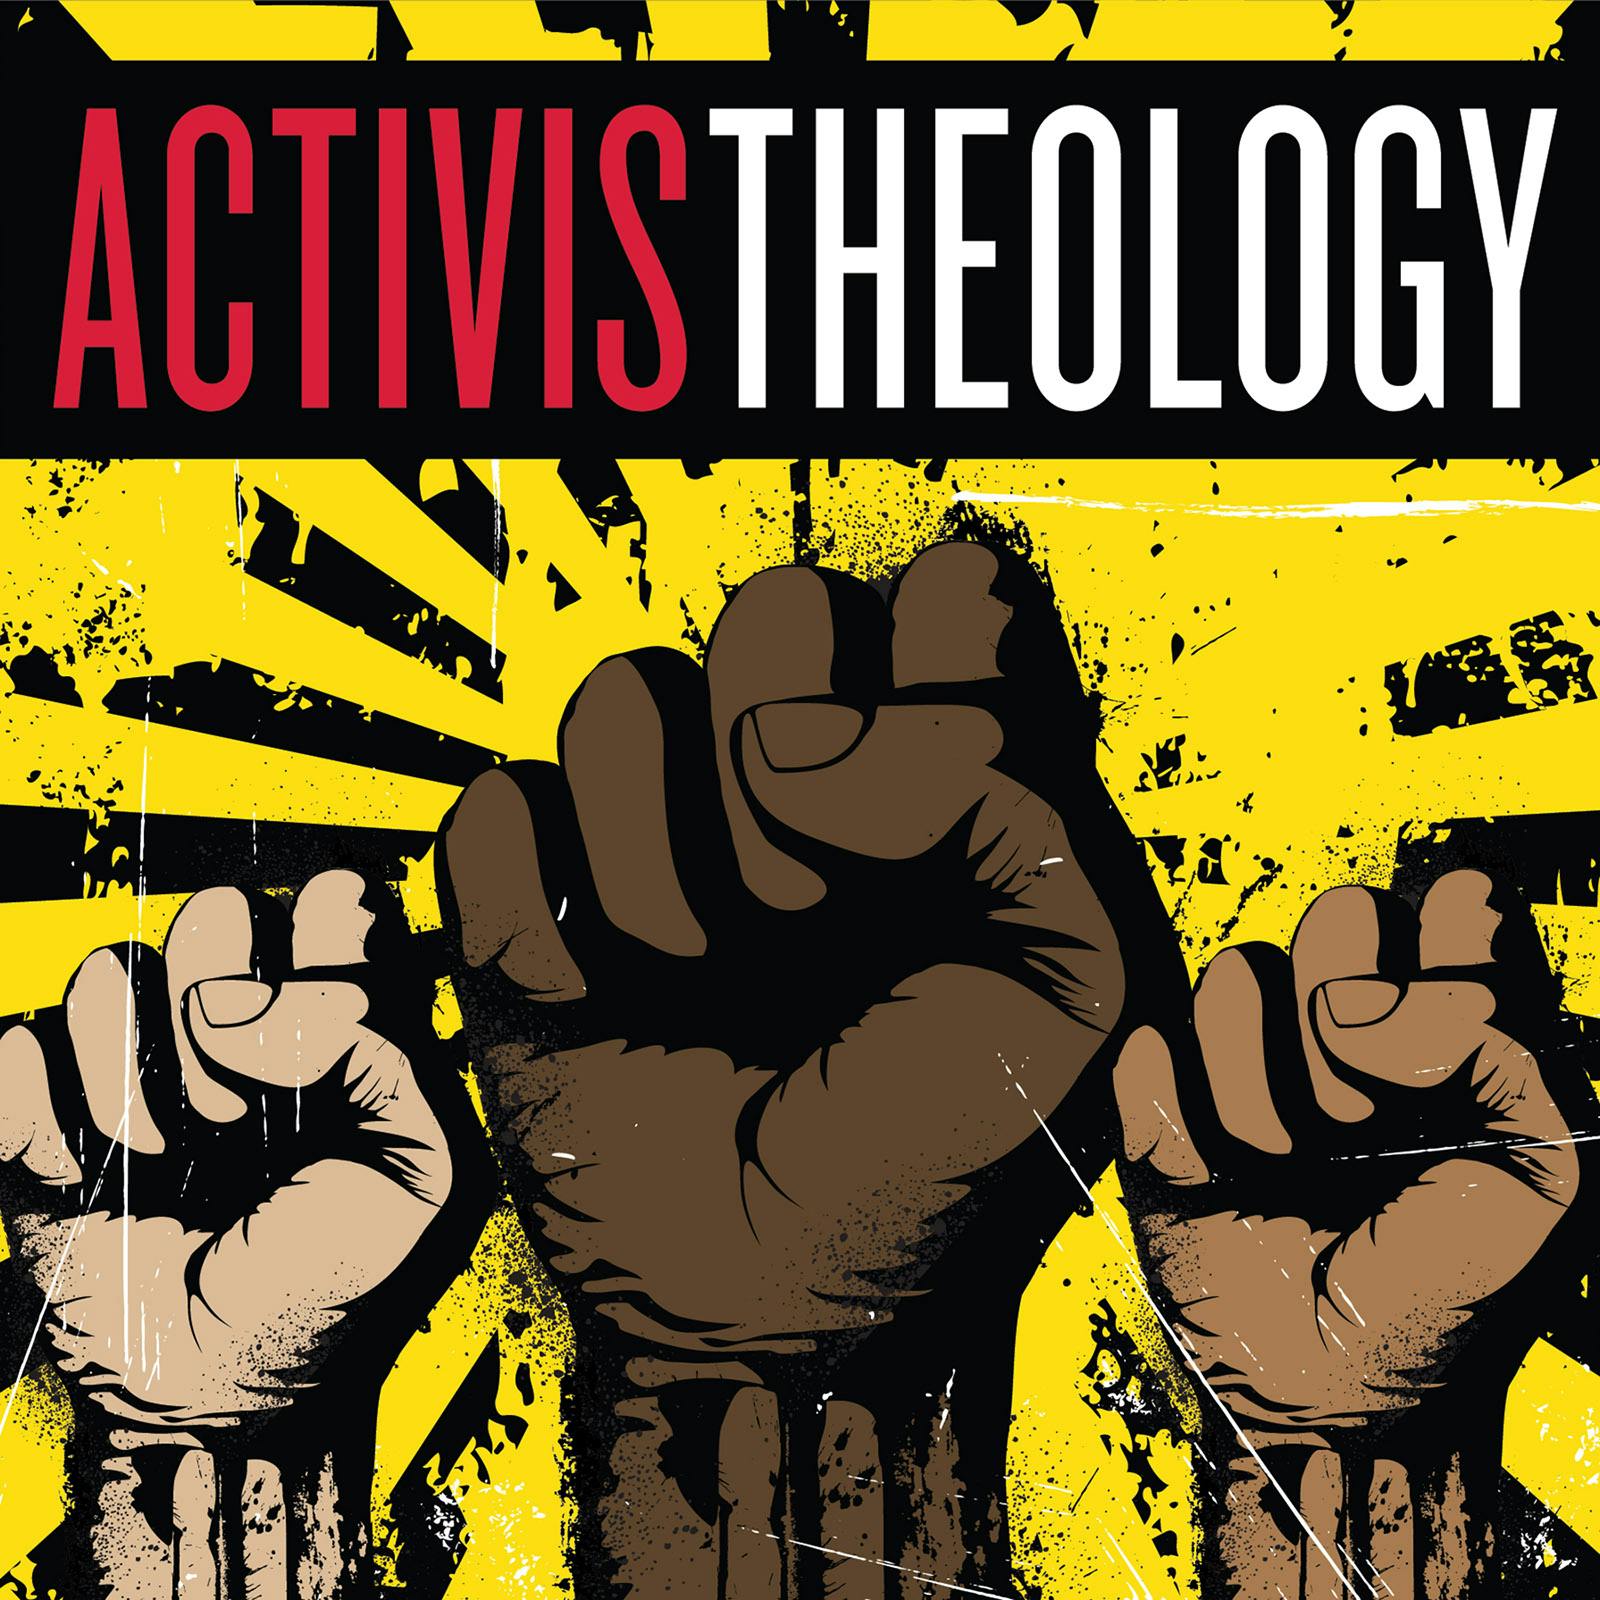 Activist Theology Podcast